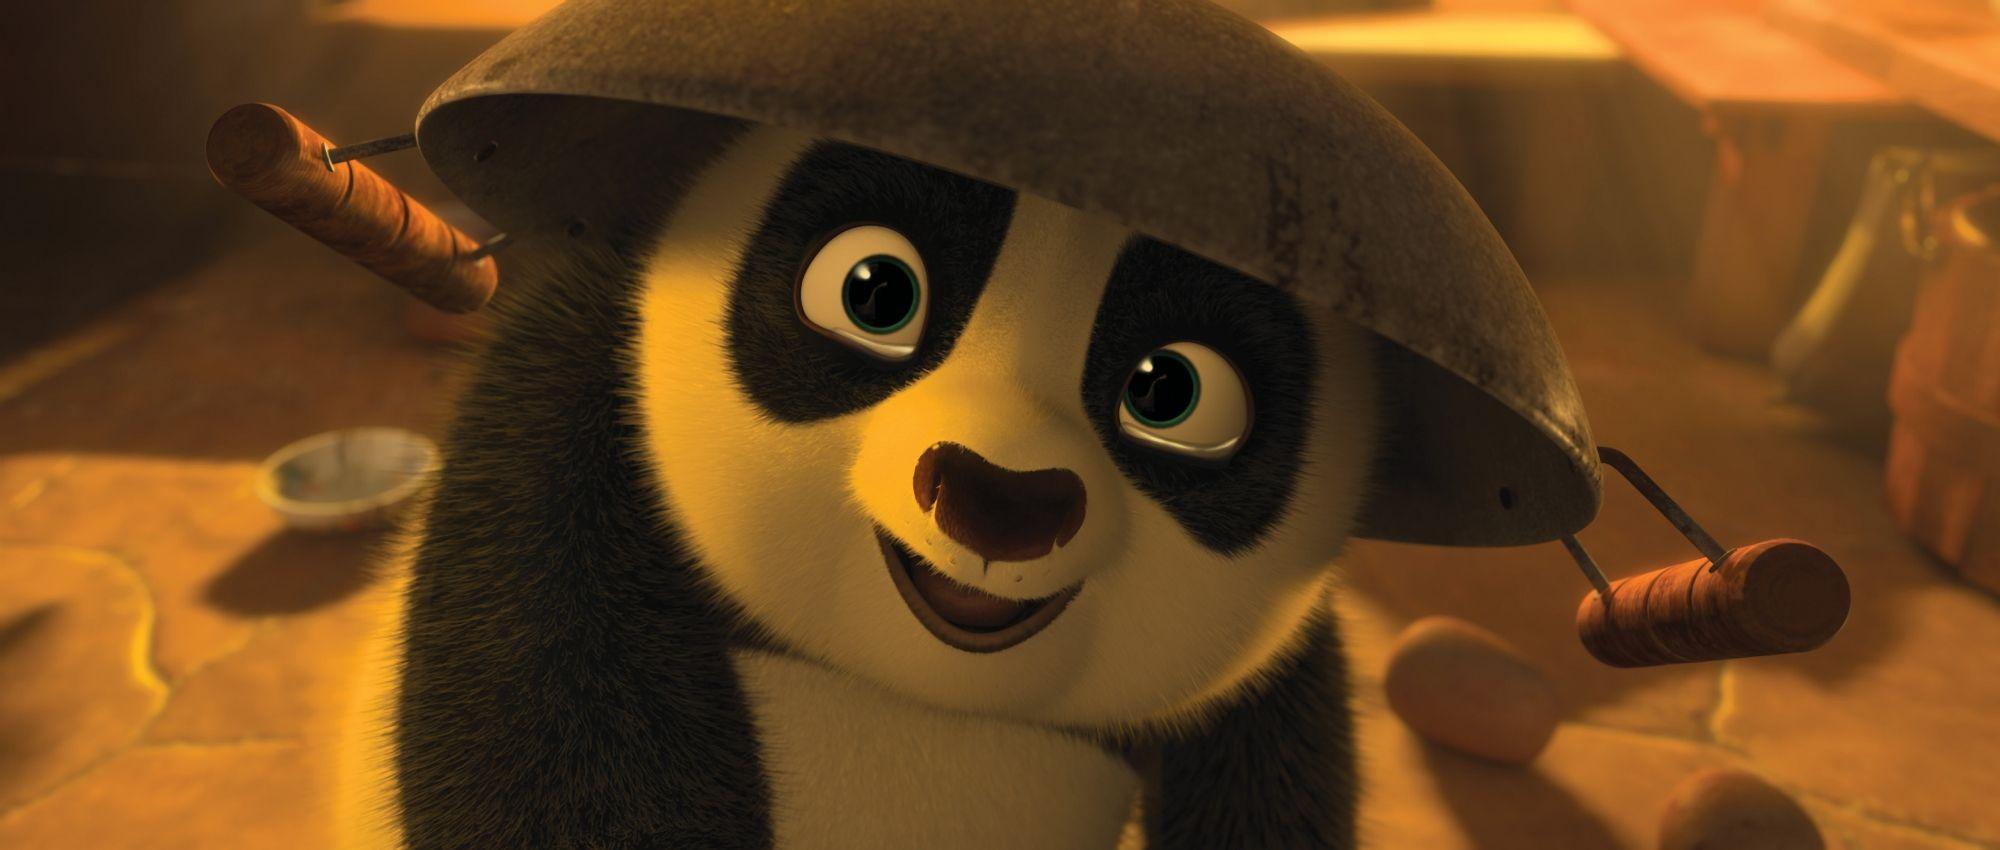 Kung Fu Panda 2 Movie Full HD Wallpaper Image for Android